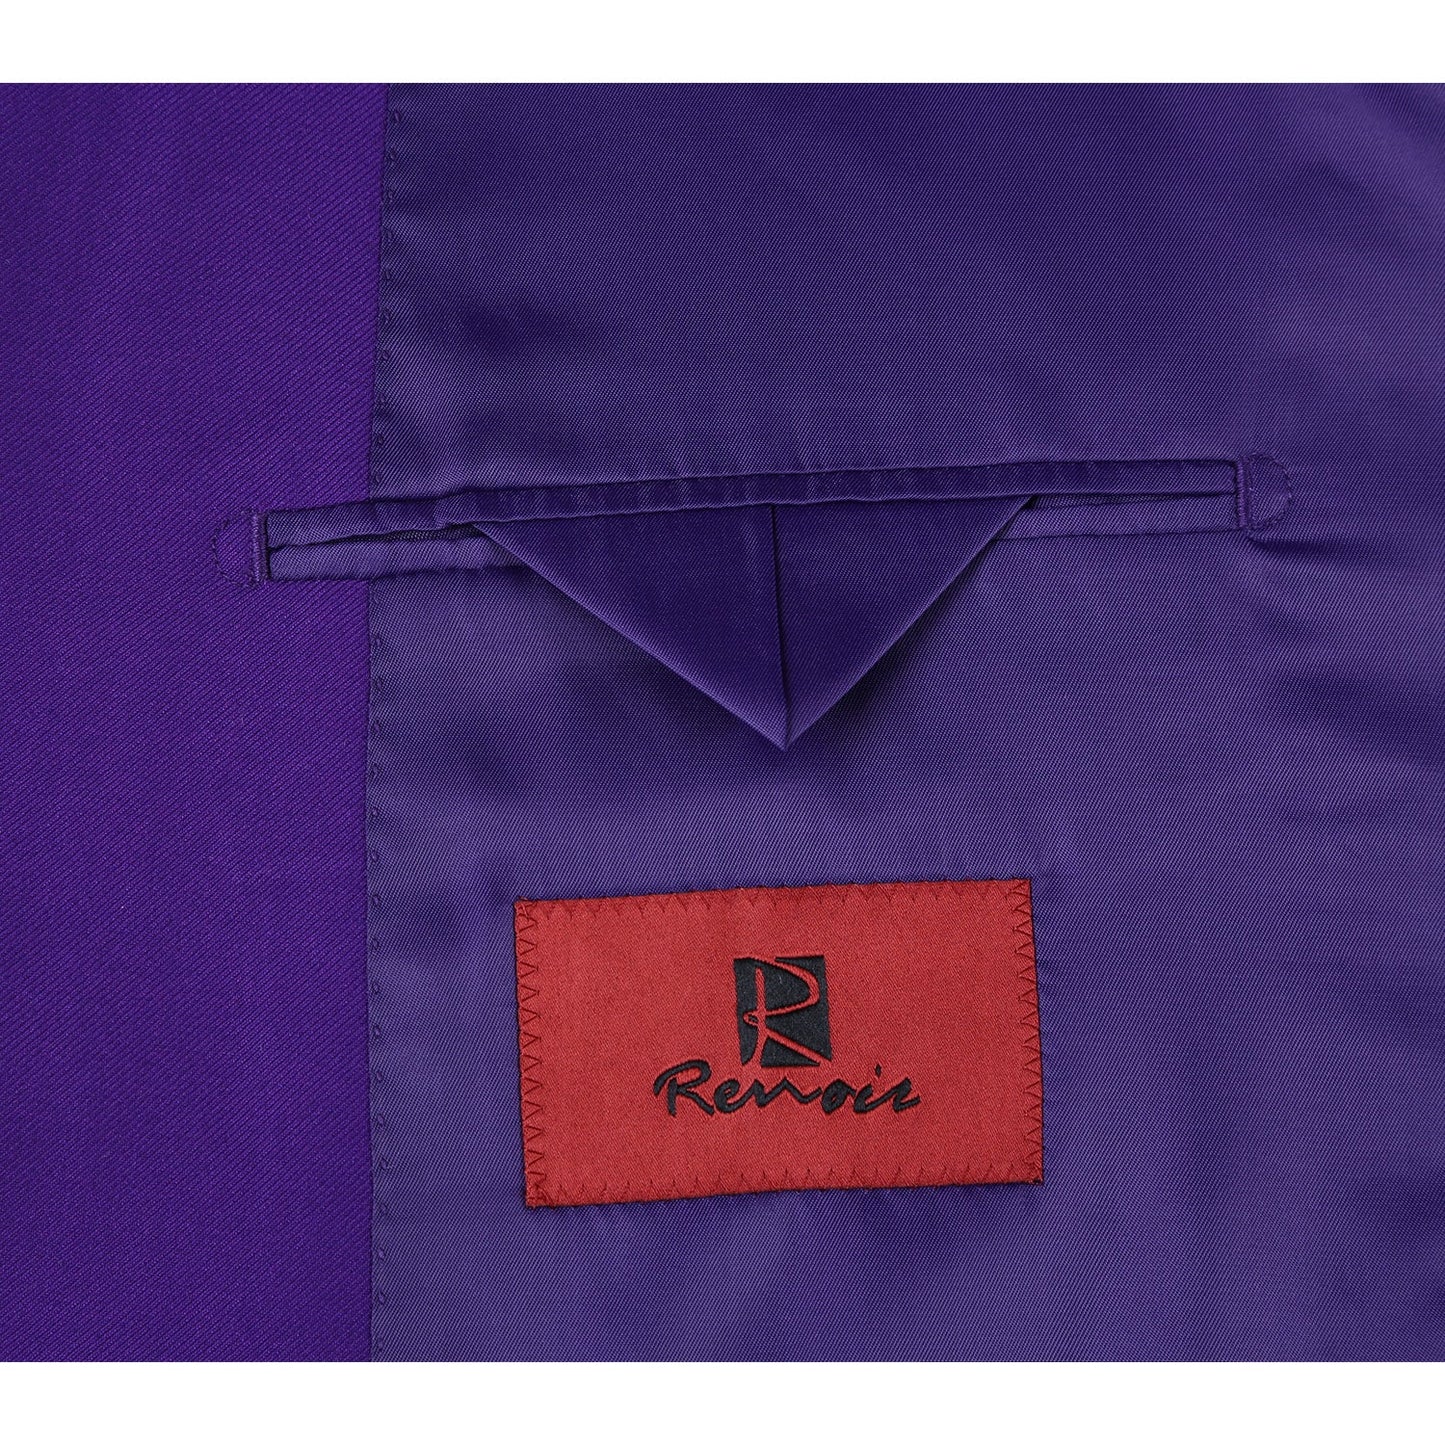 201-68 Men's 2-Piece Slim Fit Single Breasted Purple Notch Lapel Suit